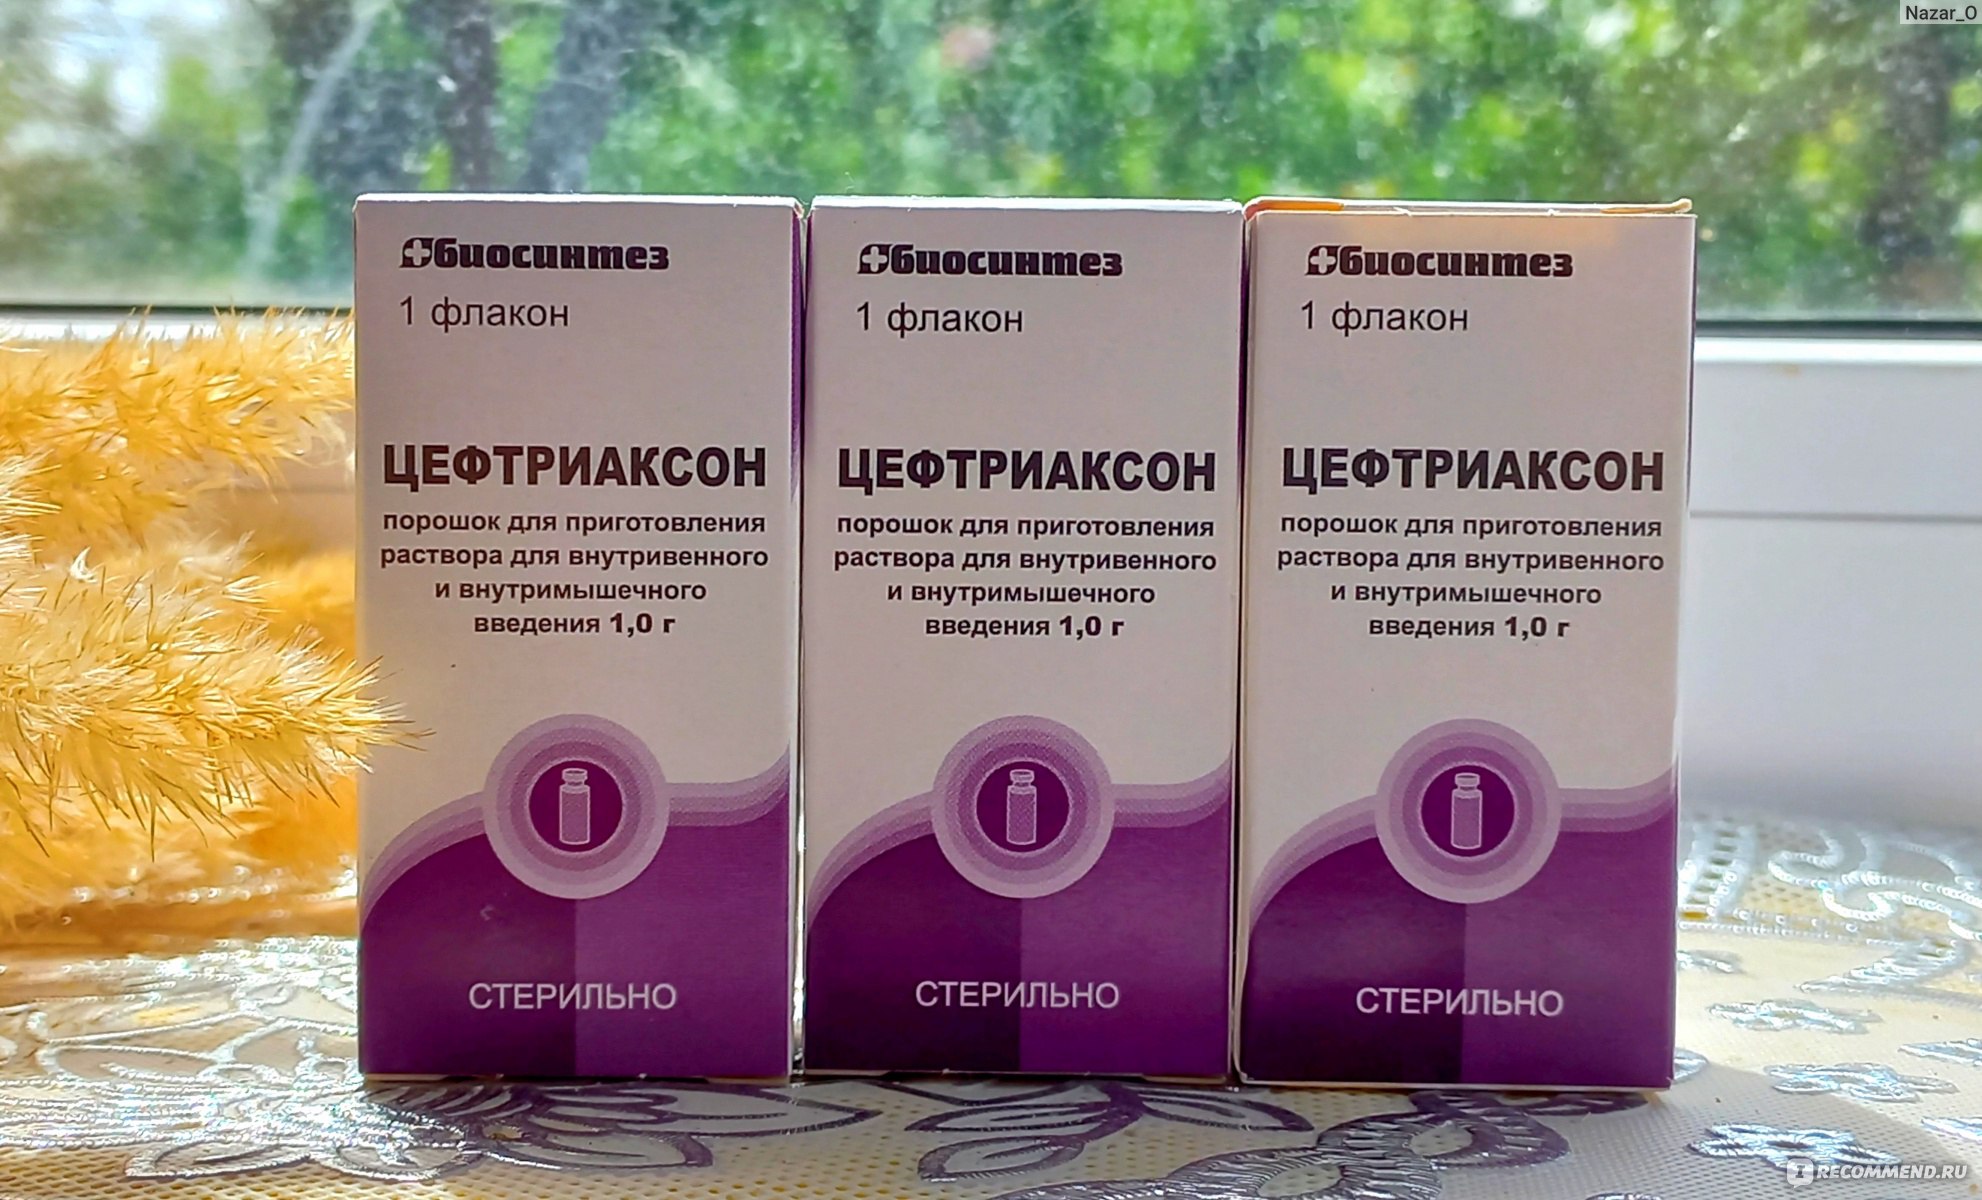 Антибиотики ОАО "Биосинтез" Цефтриаксон